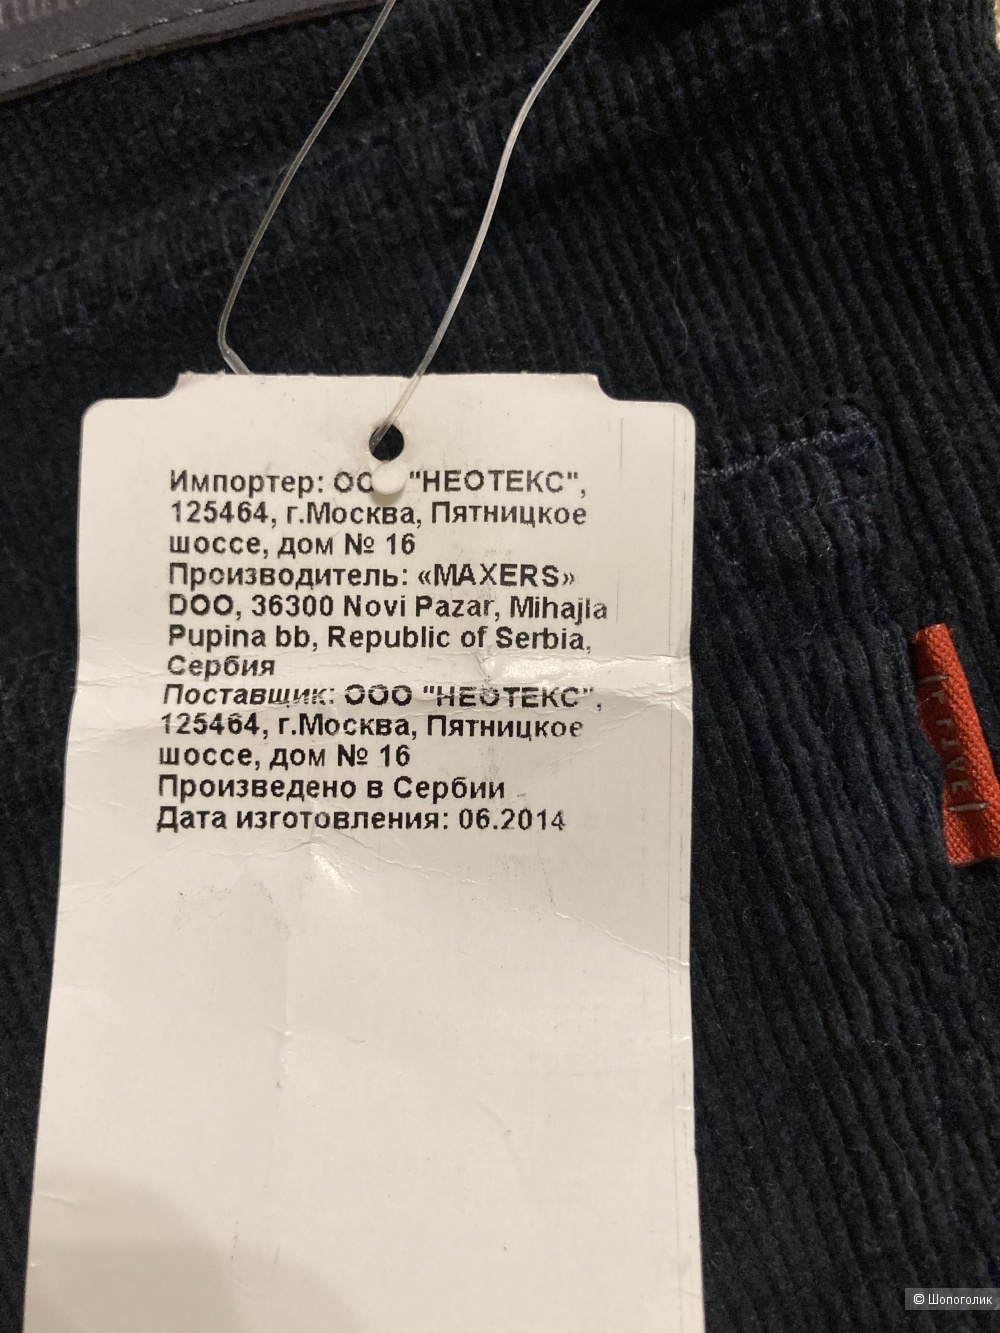 Джинсы F’five  jeans 48 размер